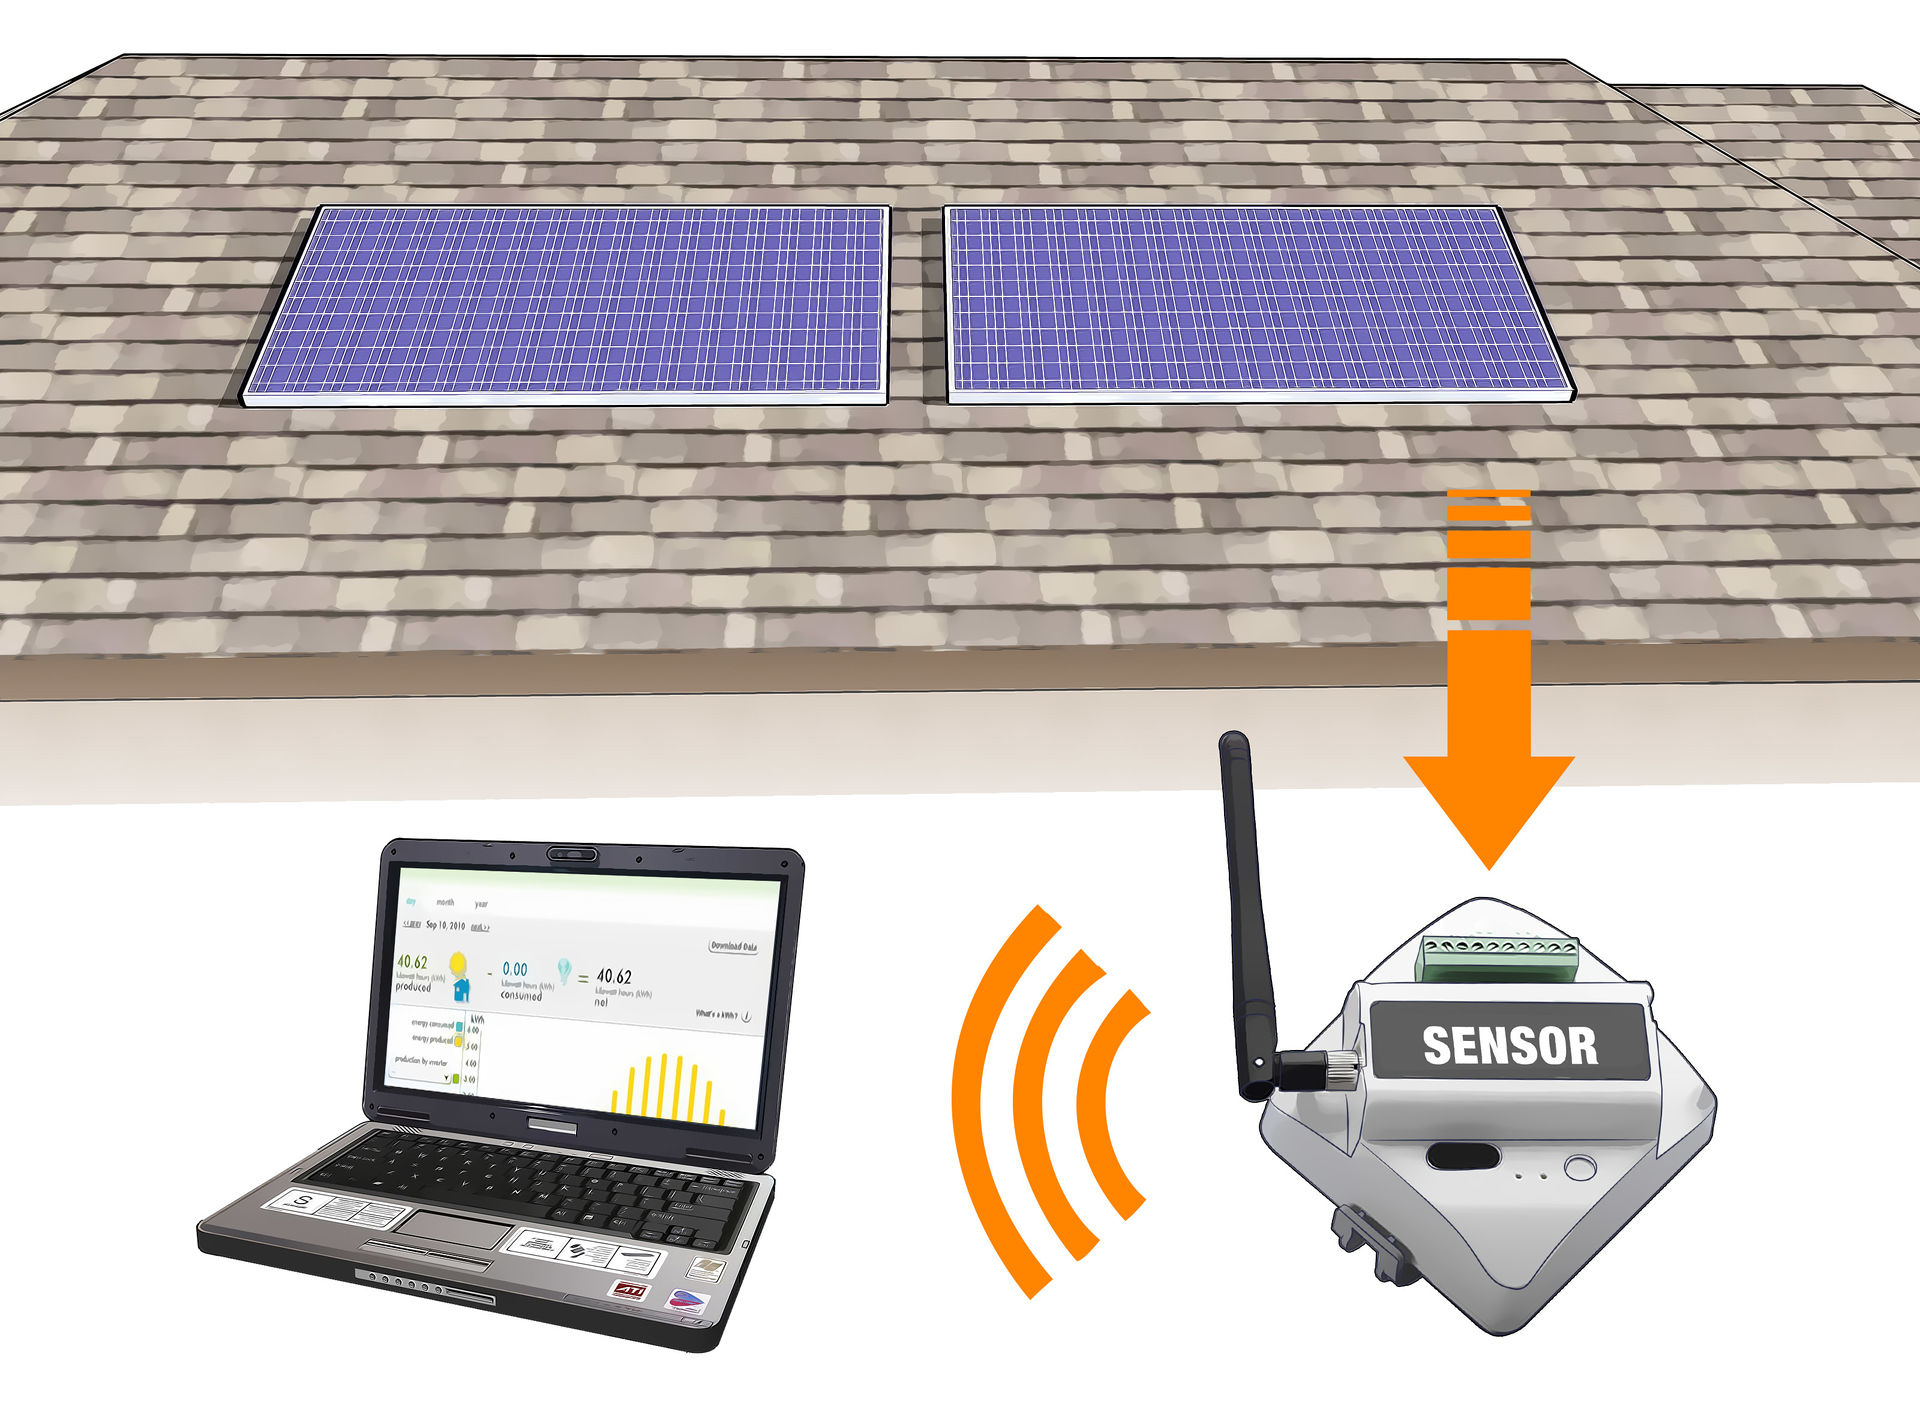 Solar panel systems